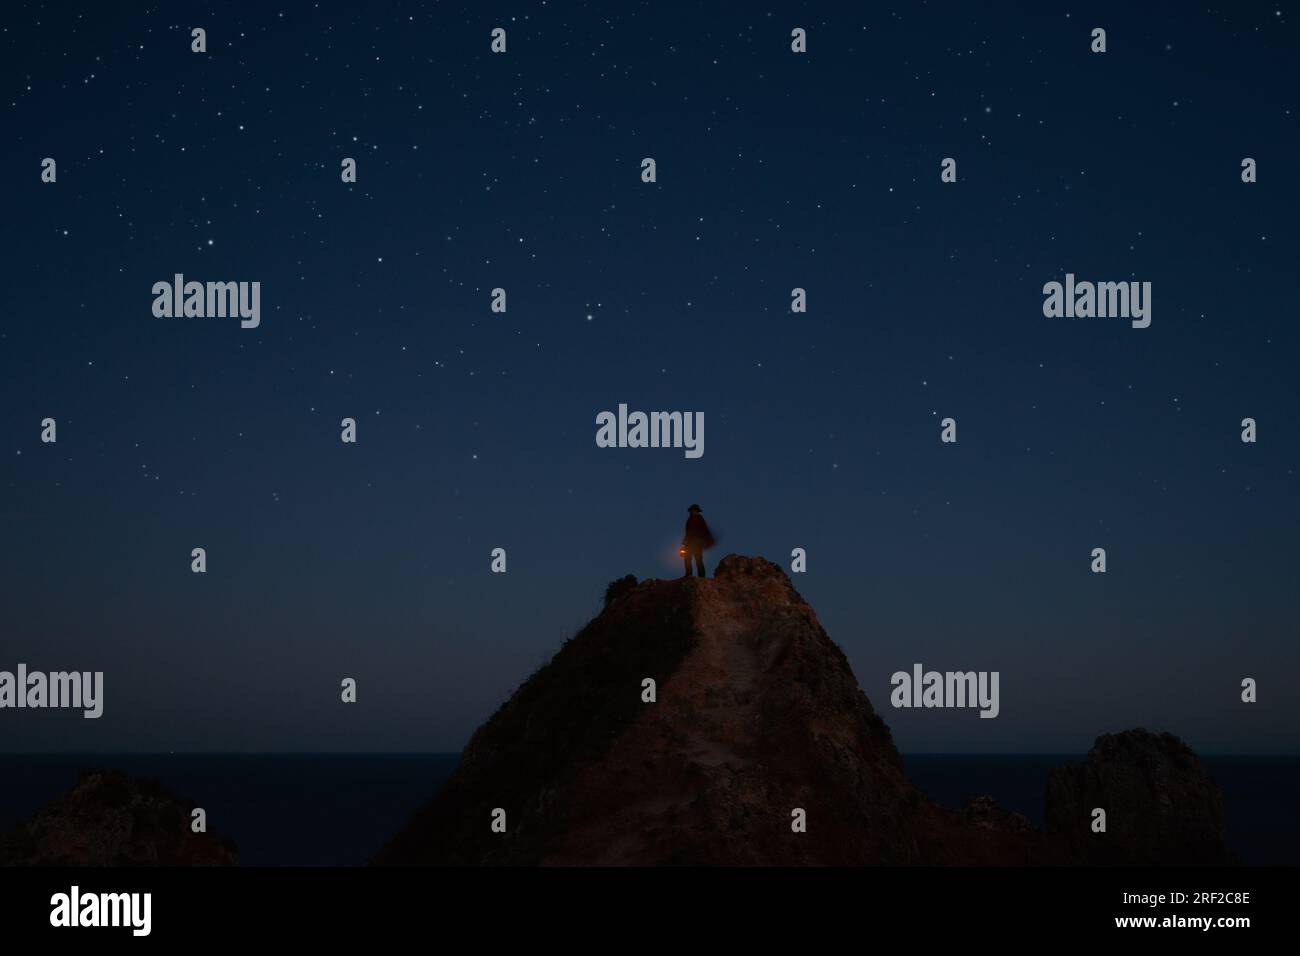 Mann mit Laterne auf dem Gipfel des Berges über dem dunklen Sternenhimmel. Stockfoto